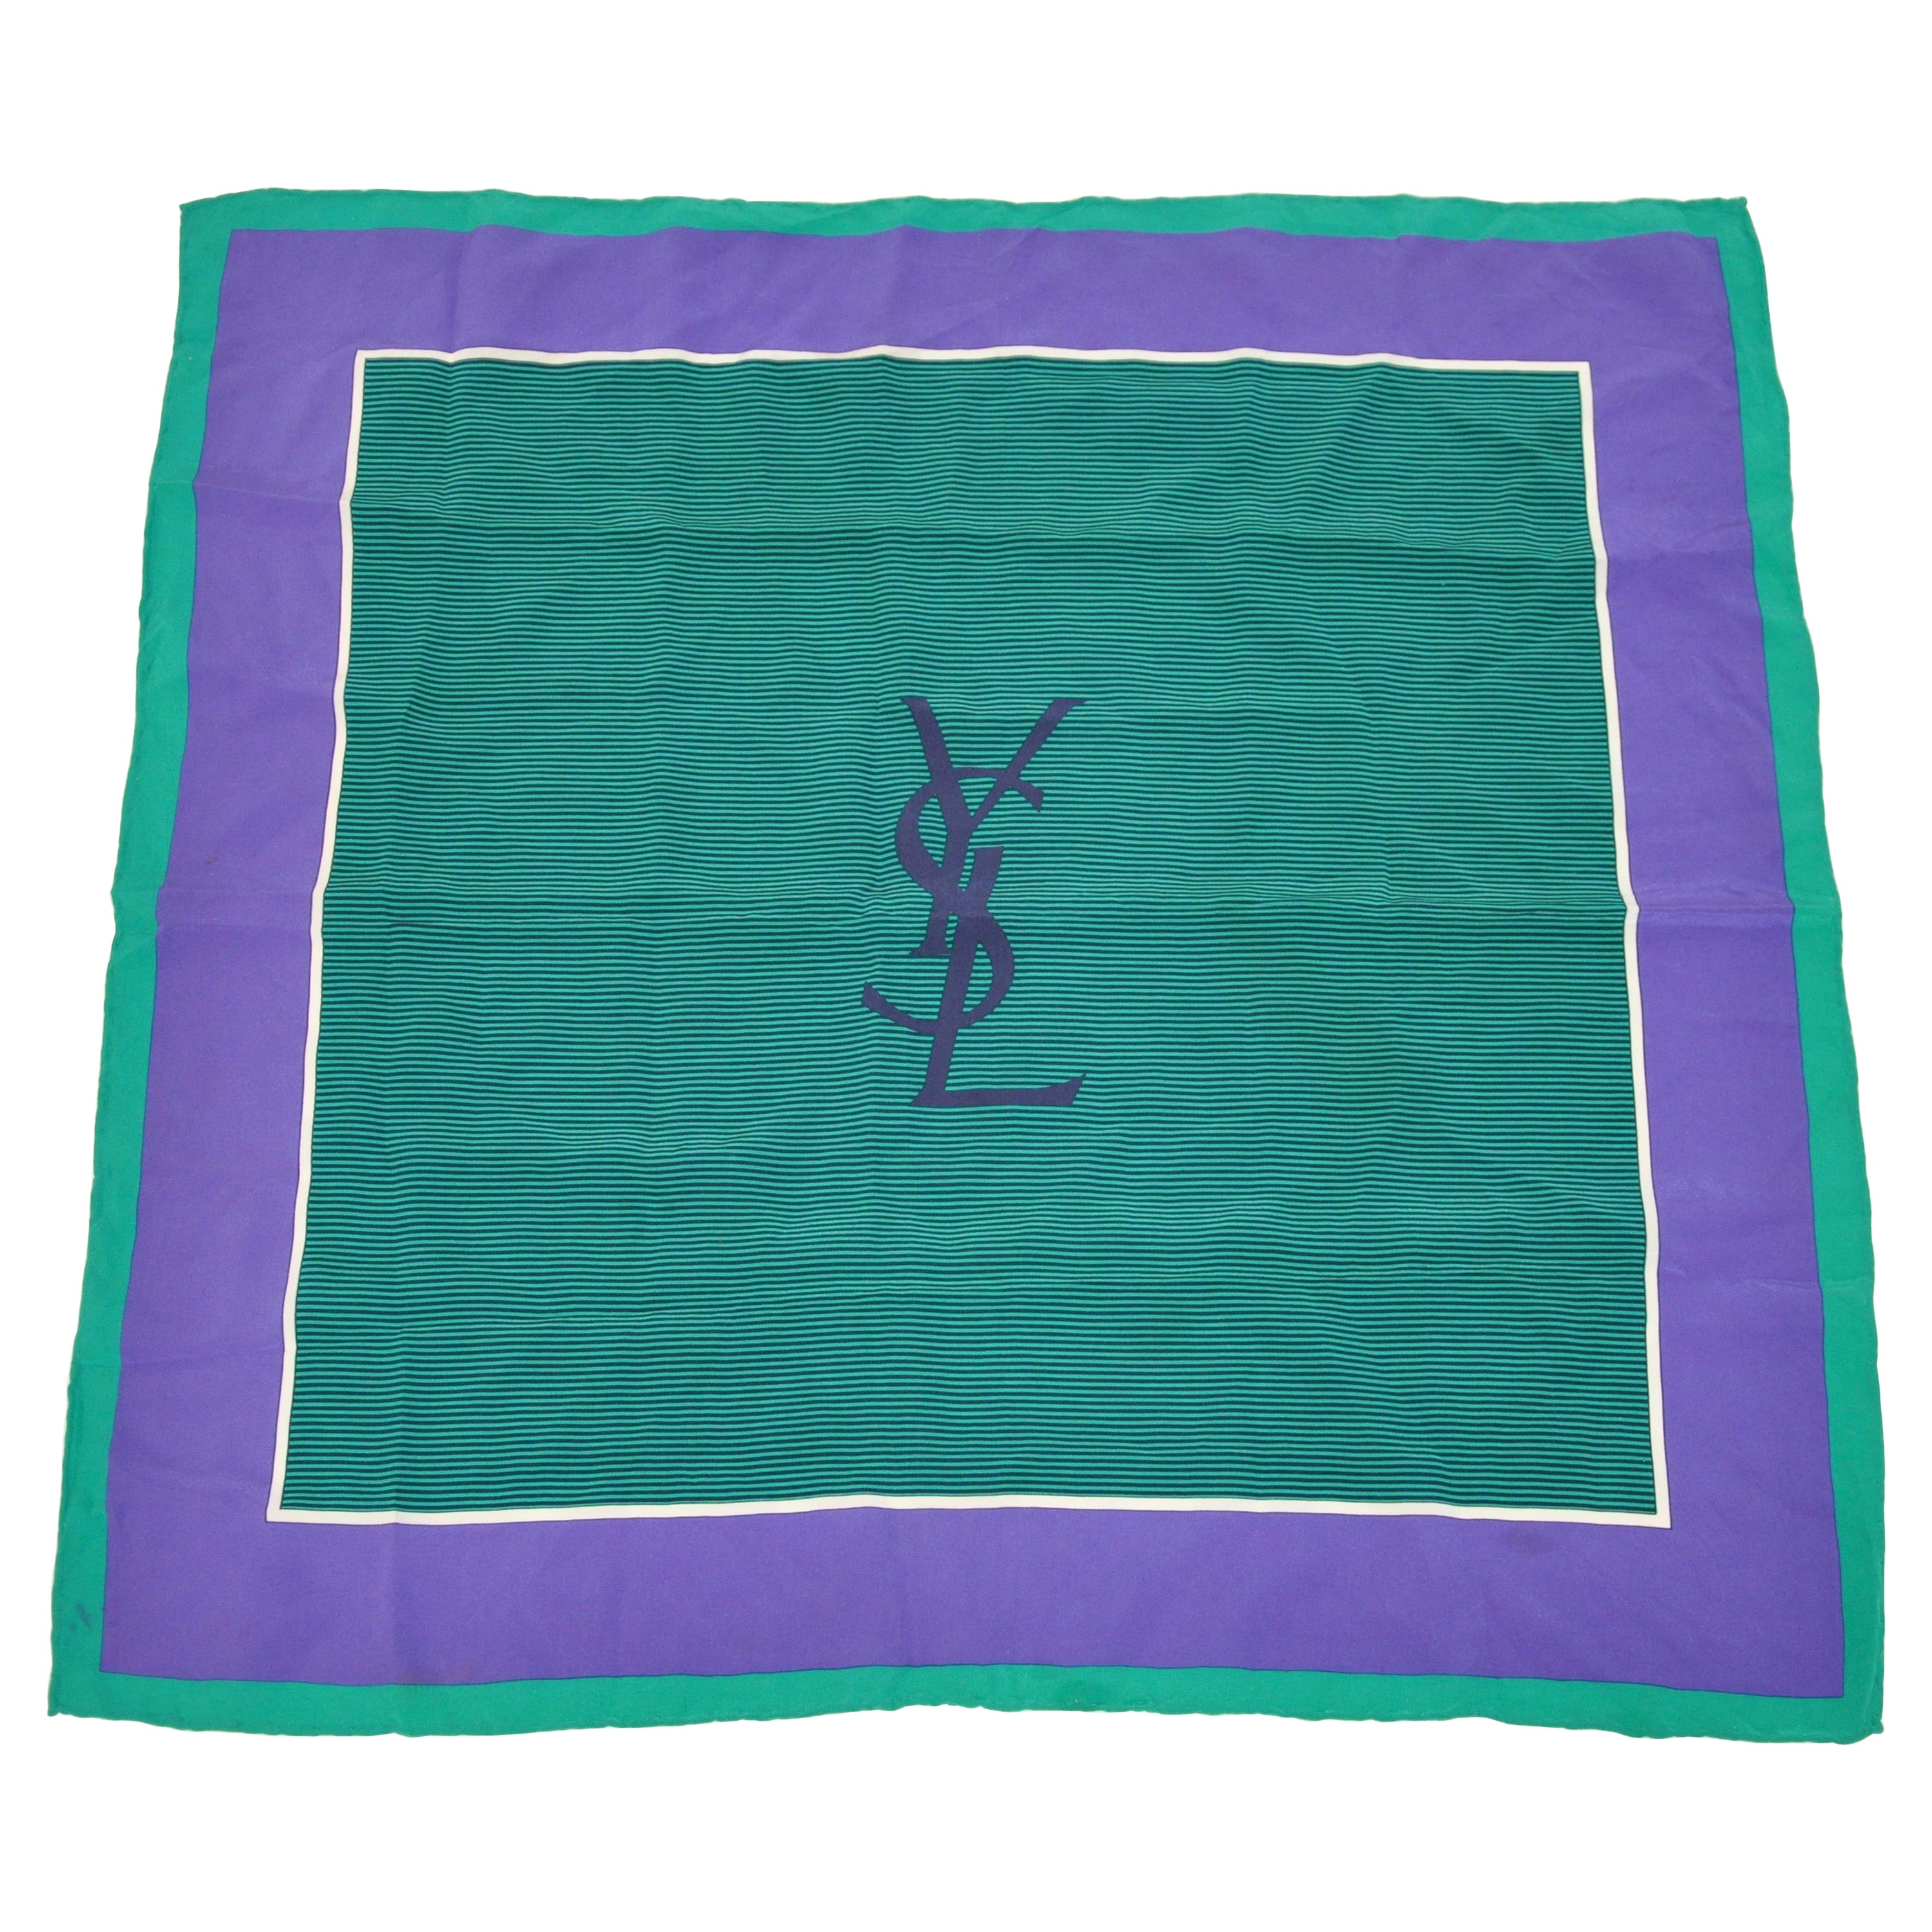 Yves Saint Laurent Deep Lavender & Green Border Silk Scarf